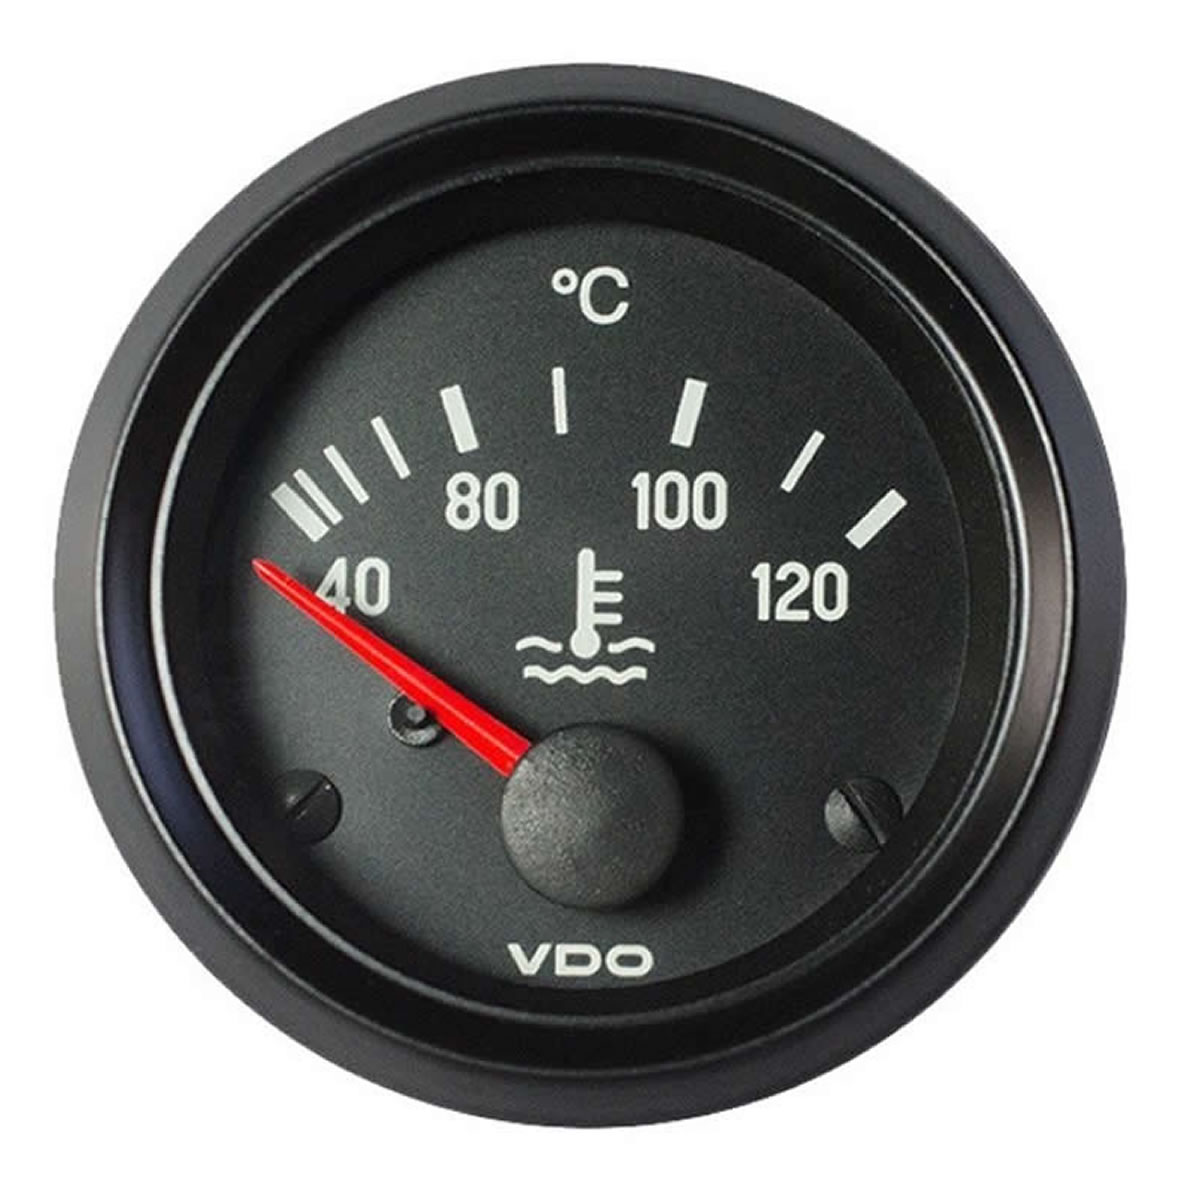 VDO Cockpit Vision Coolant temperature Gauges 120C